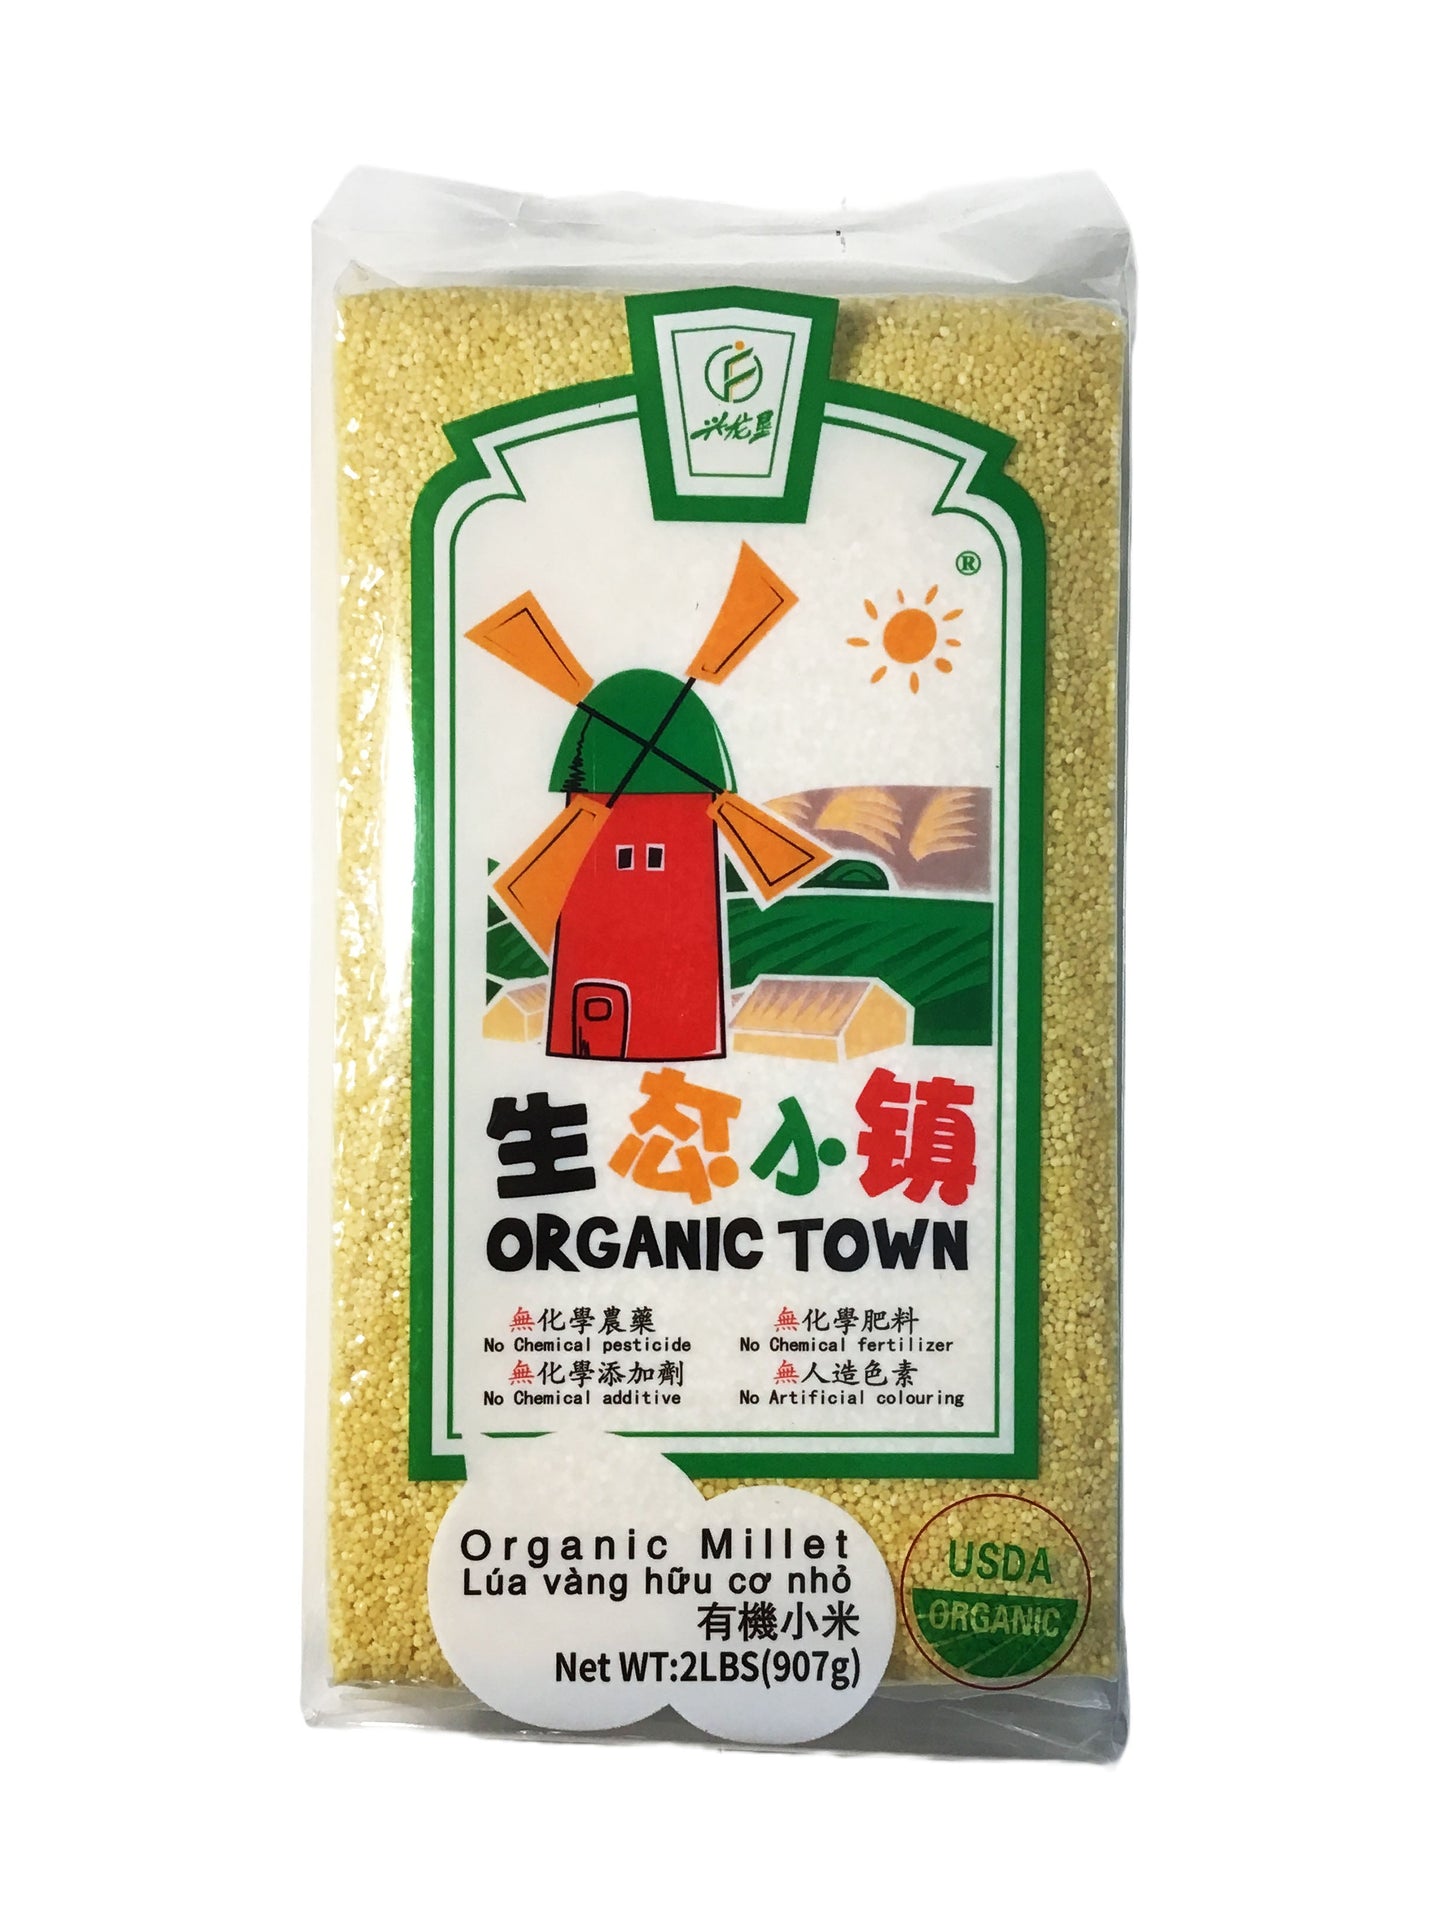 Organic Town Millet 2 lb 兴龙垦 生态小镇 有机小米